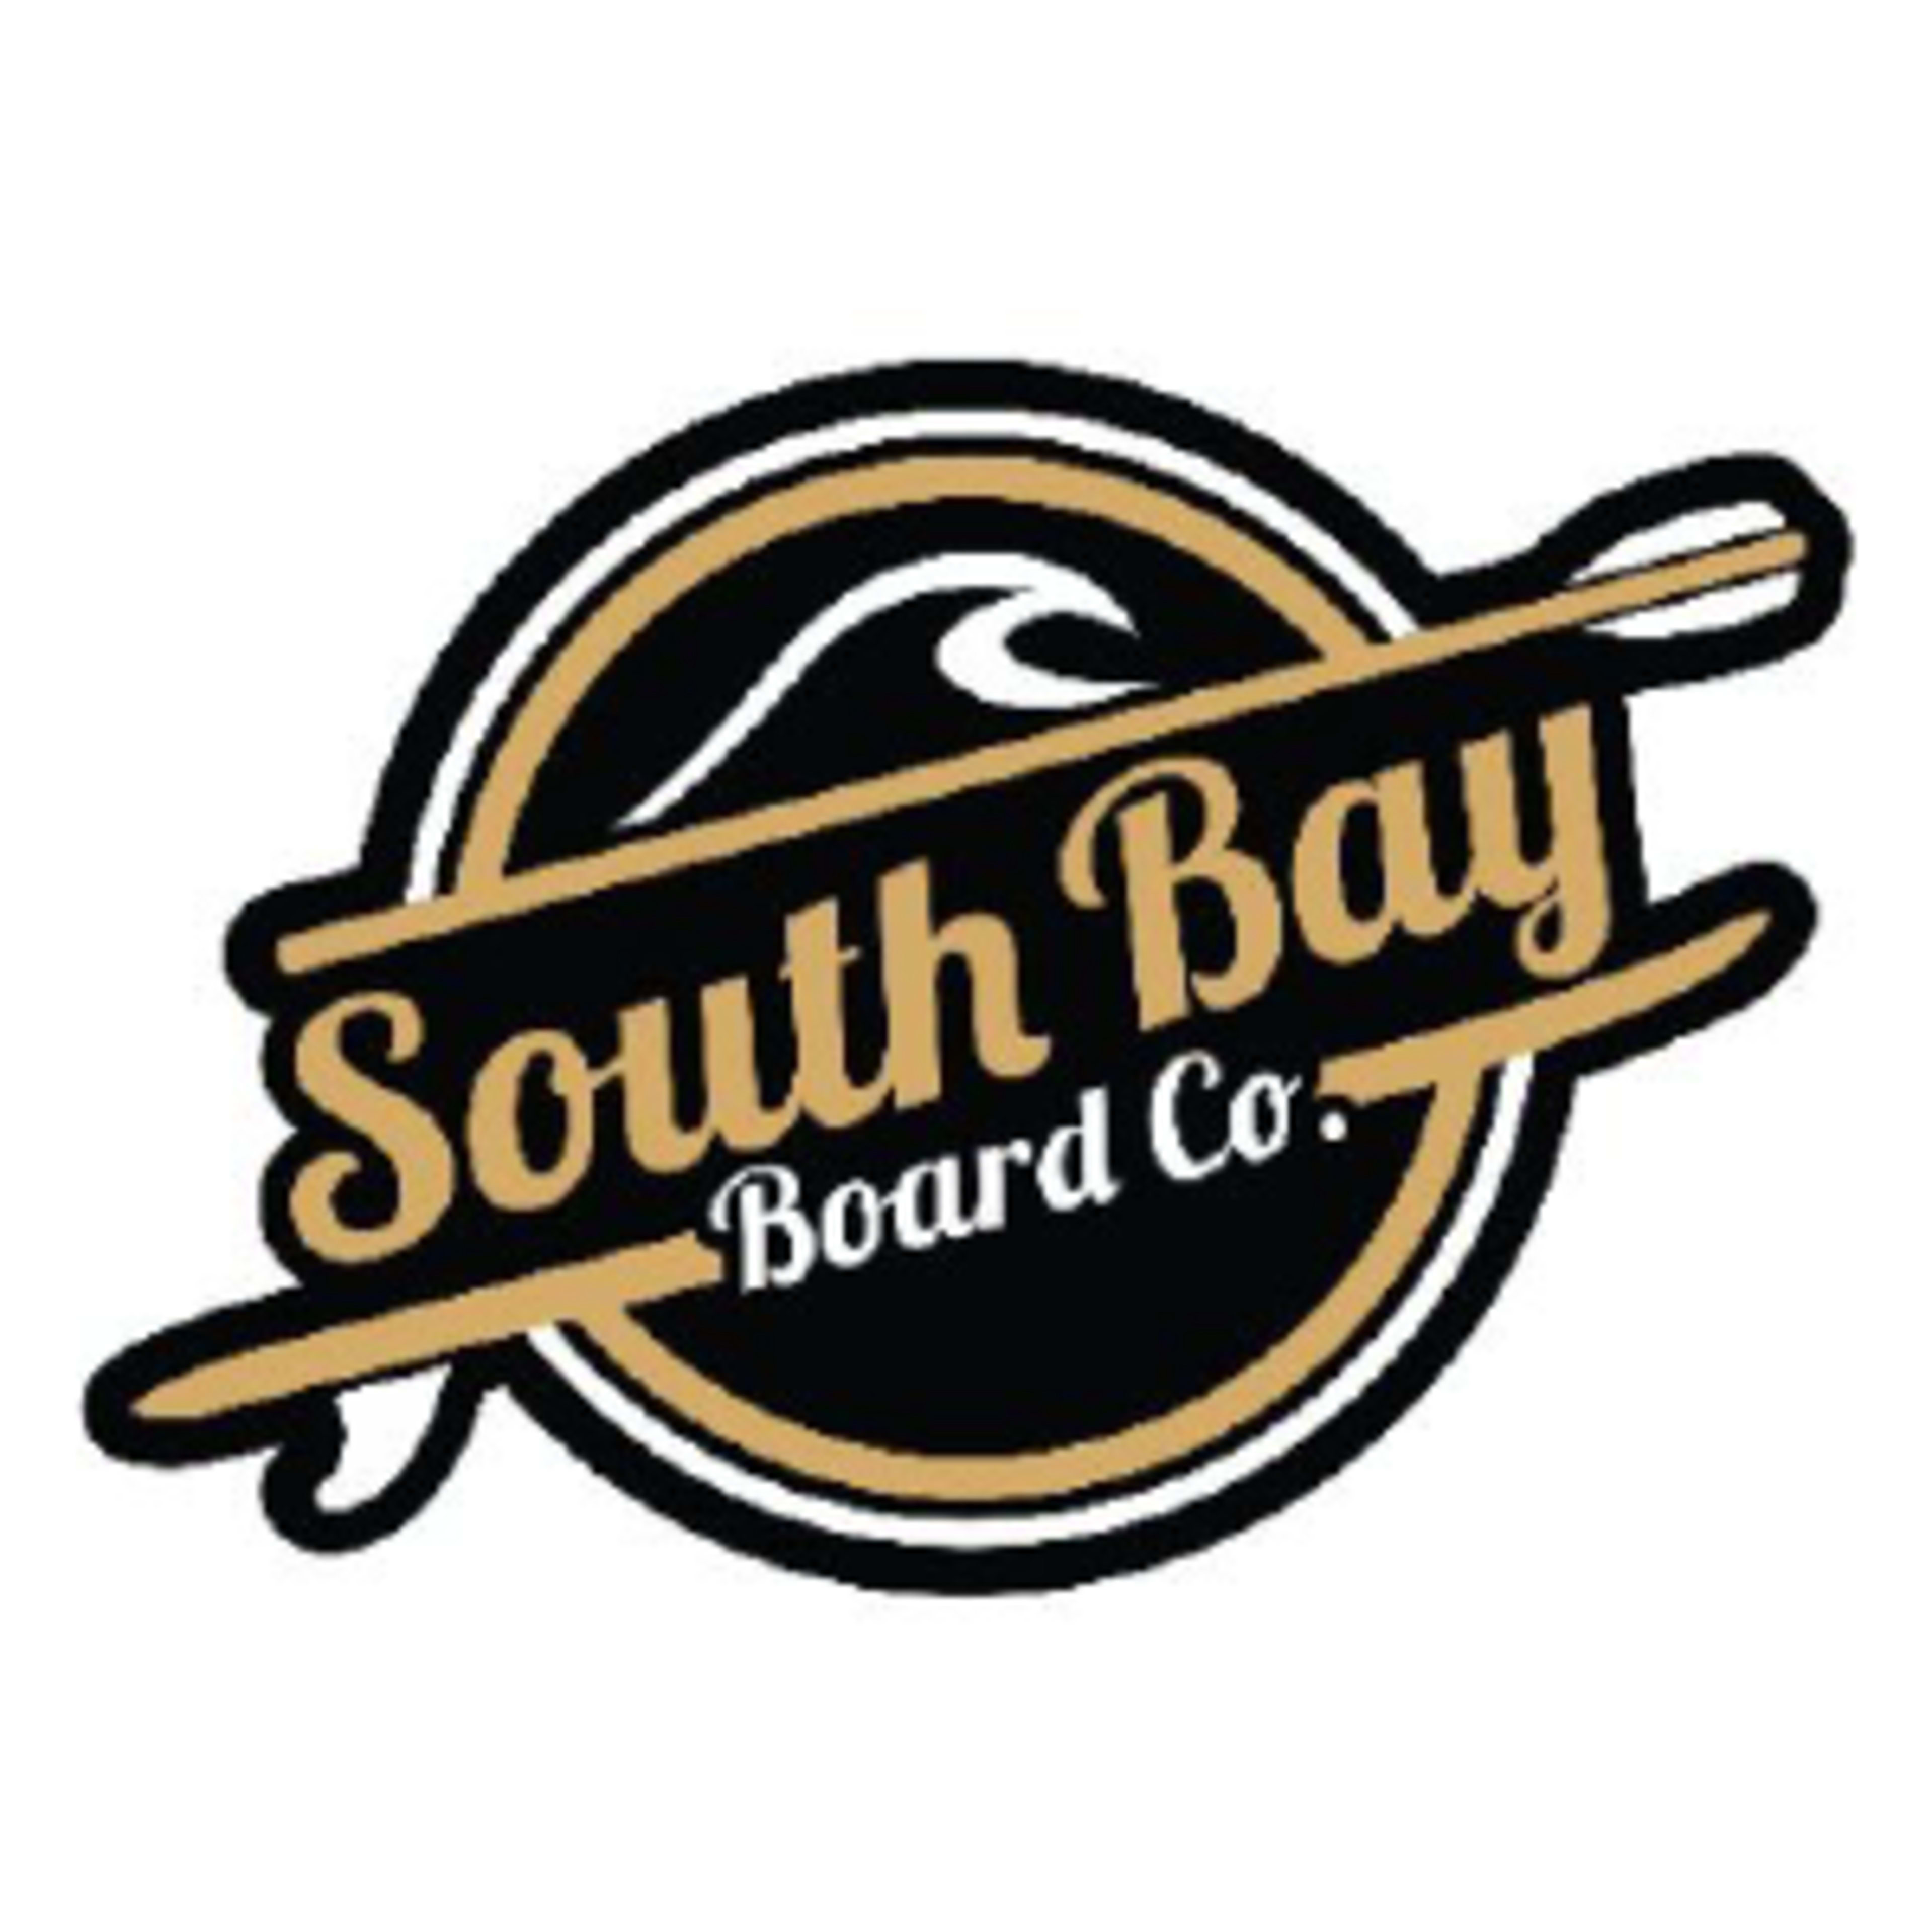 South Bay Board Co.Code